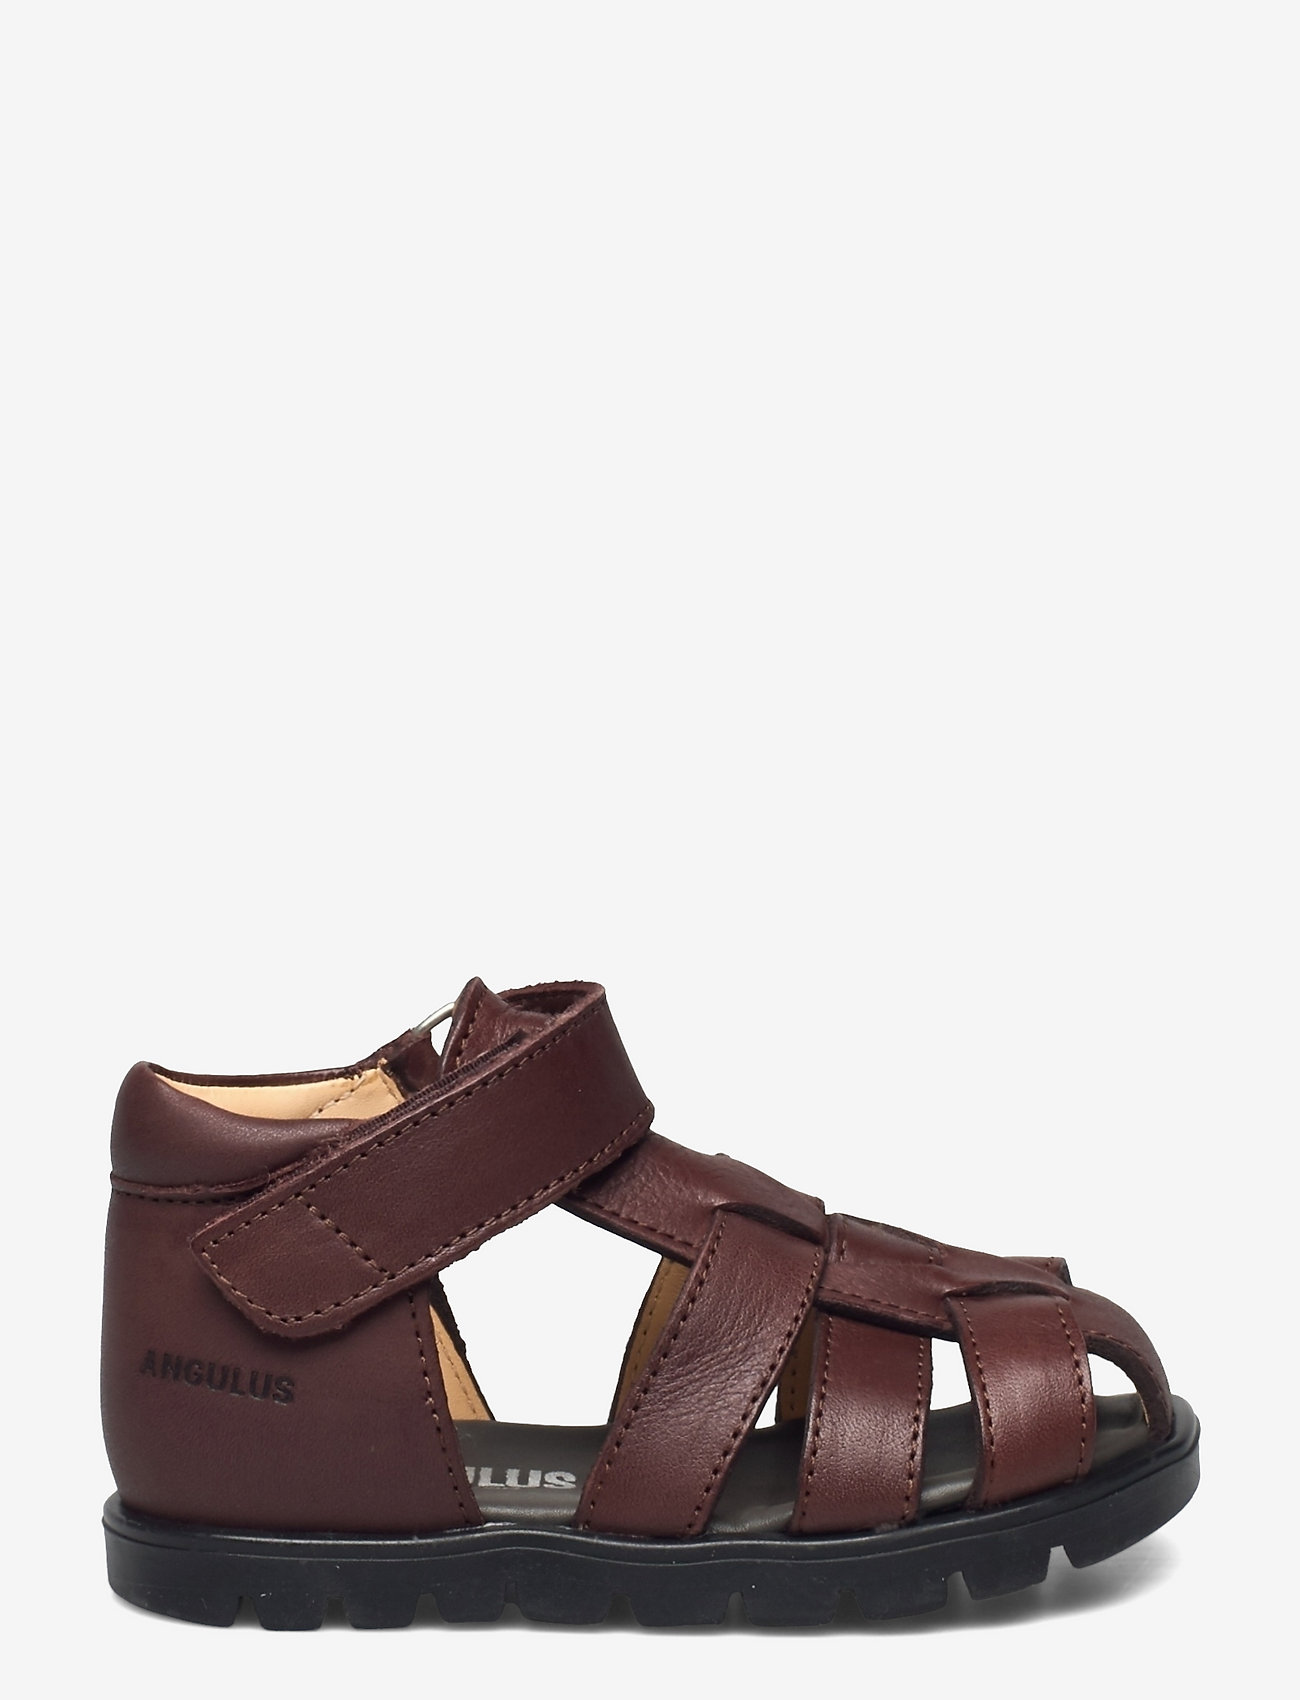 ANGULUS - Sandals - flat - closed toe -  - remmisandaalit - 1547 dark brown - 1